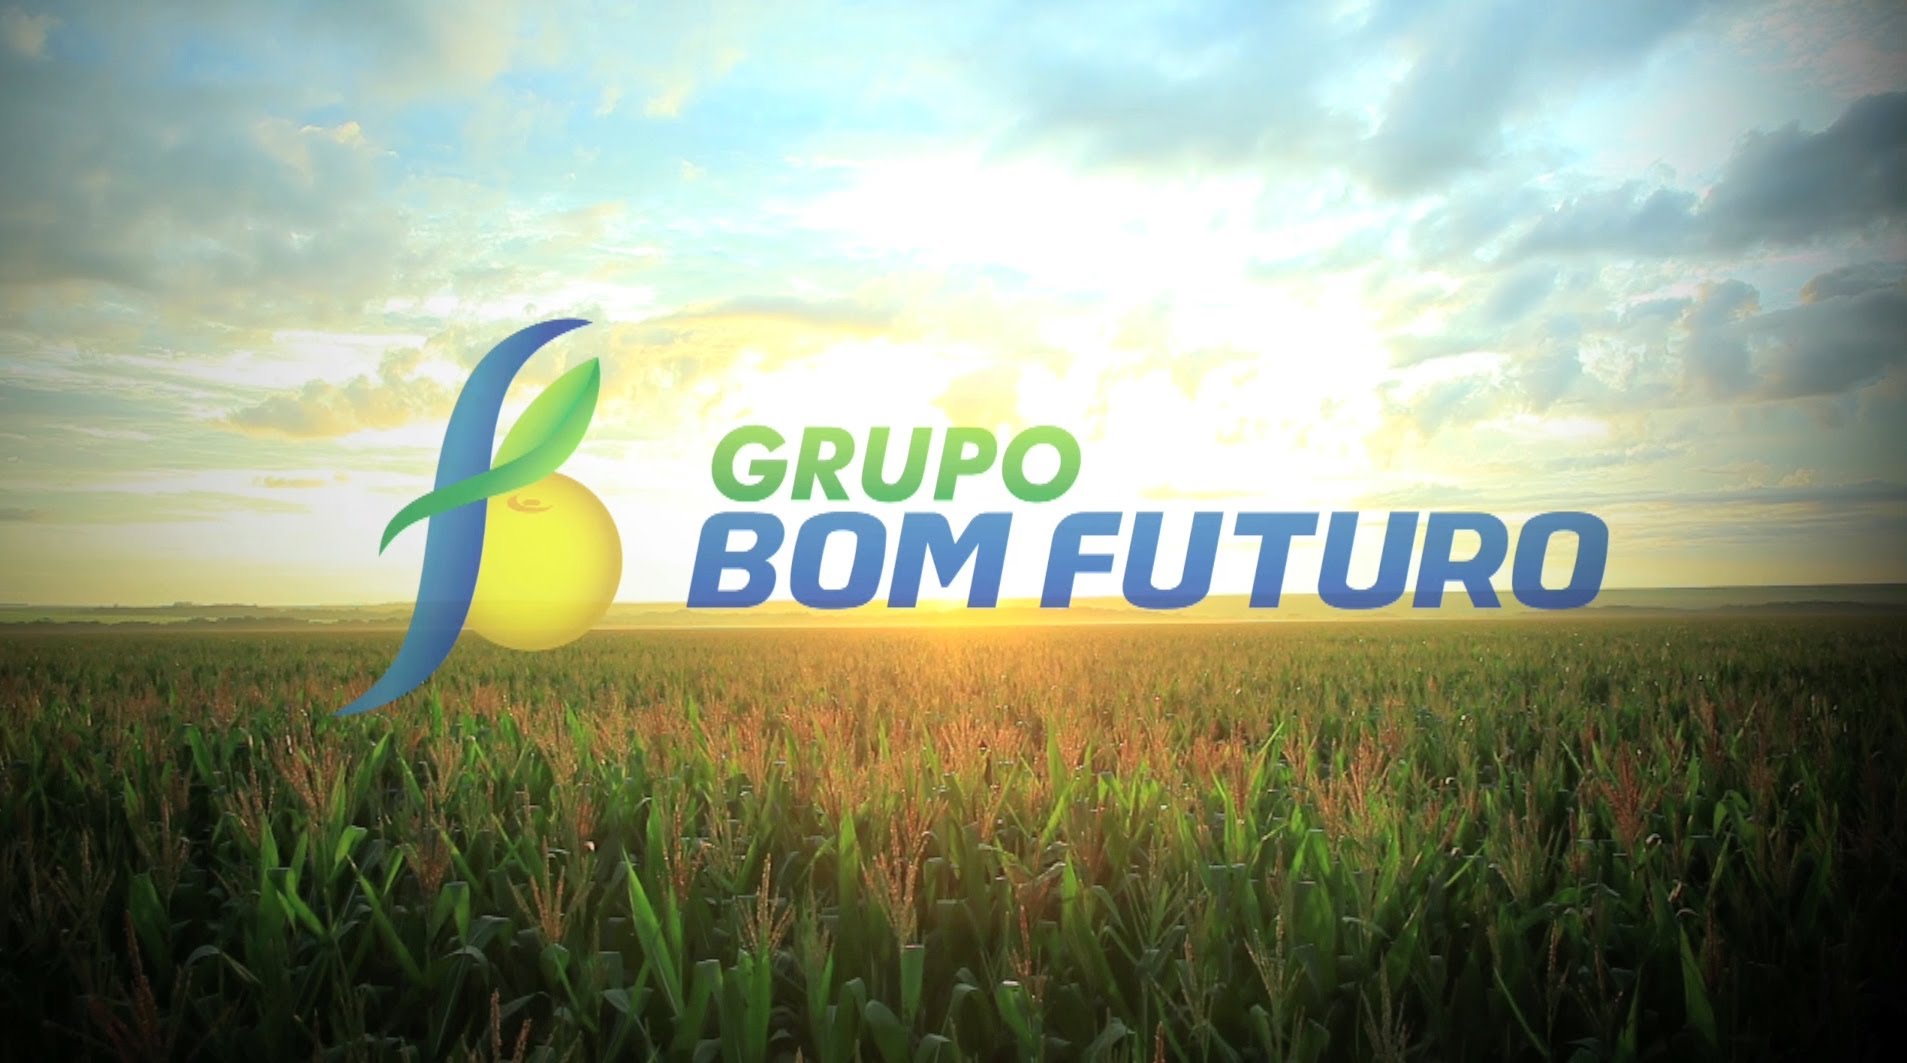 Grupo Bom Futuro Logo photo - 1